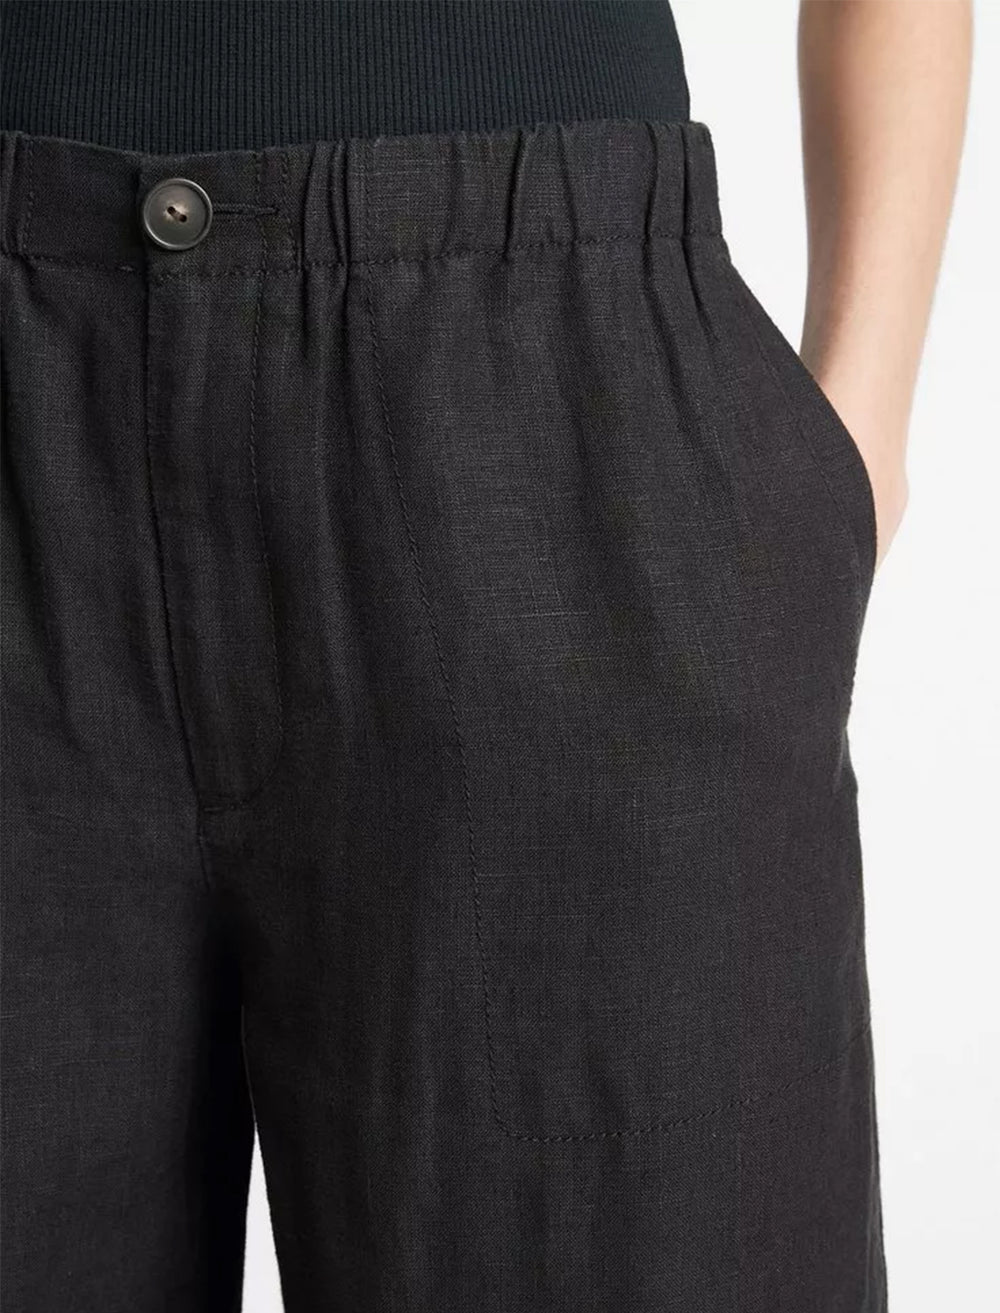 hemp utility pant in black (2)